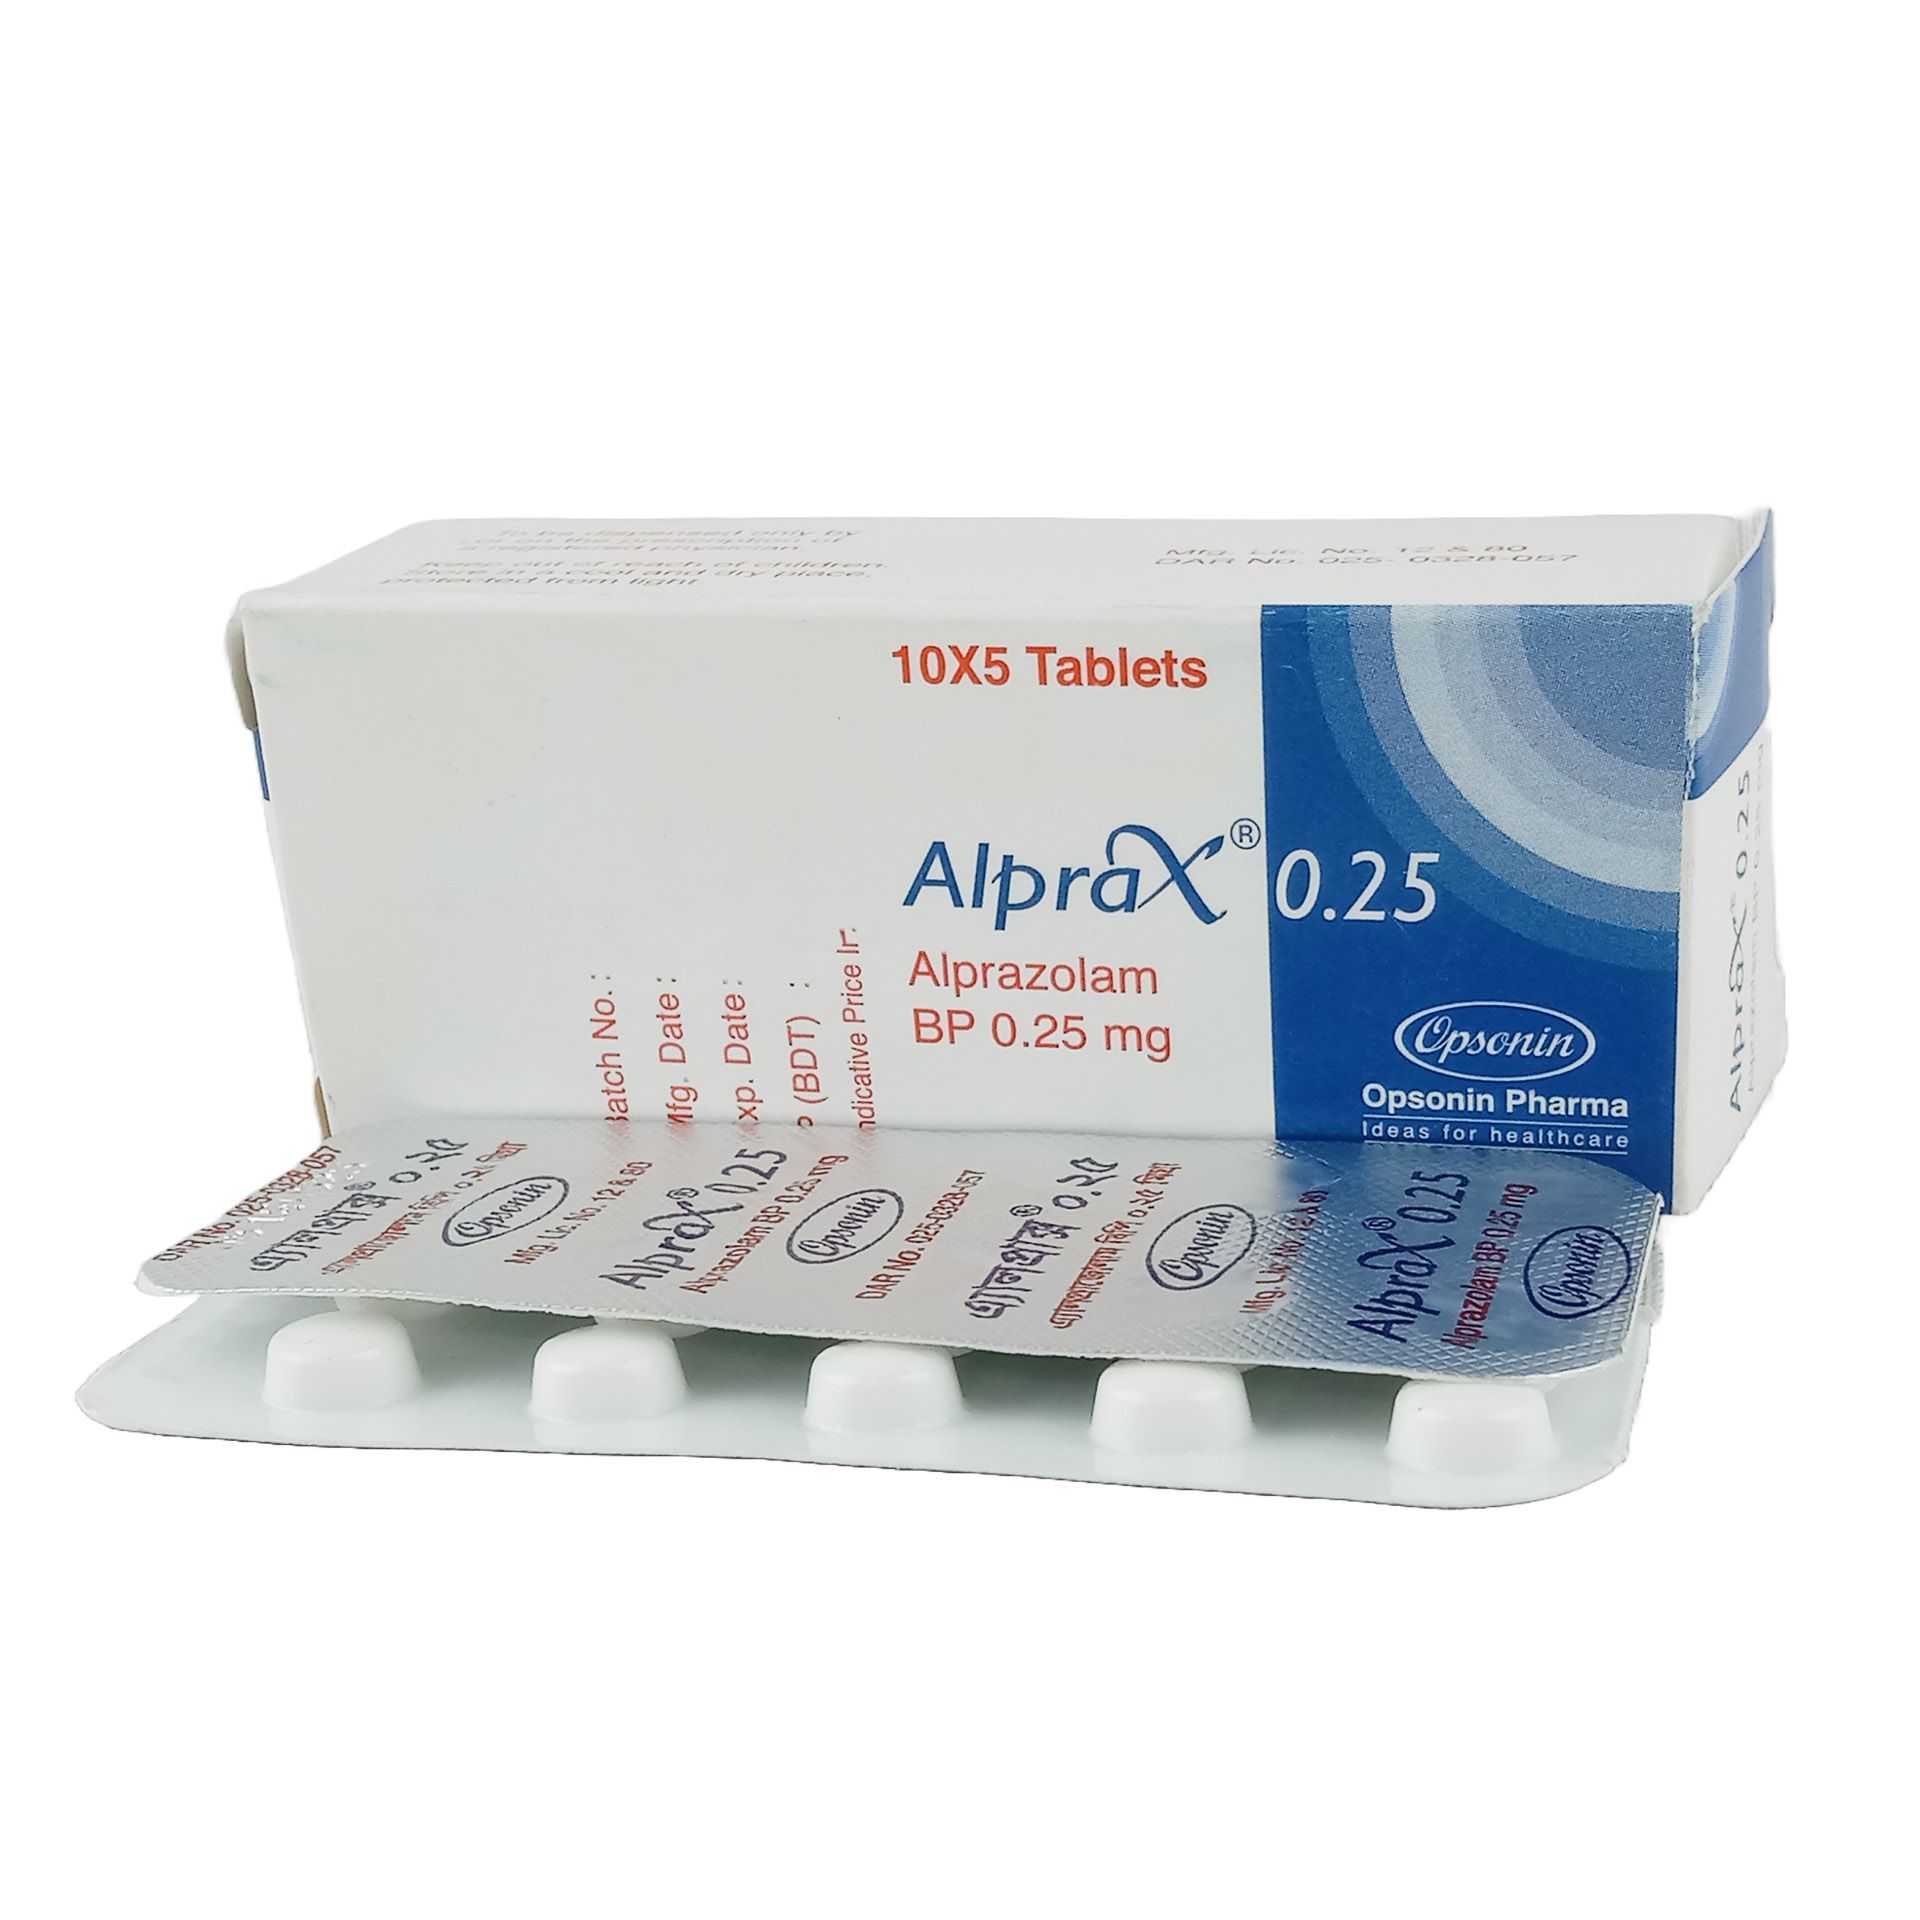 Alprax 0.25 0.25mg Tablet